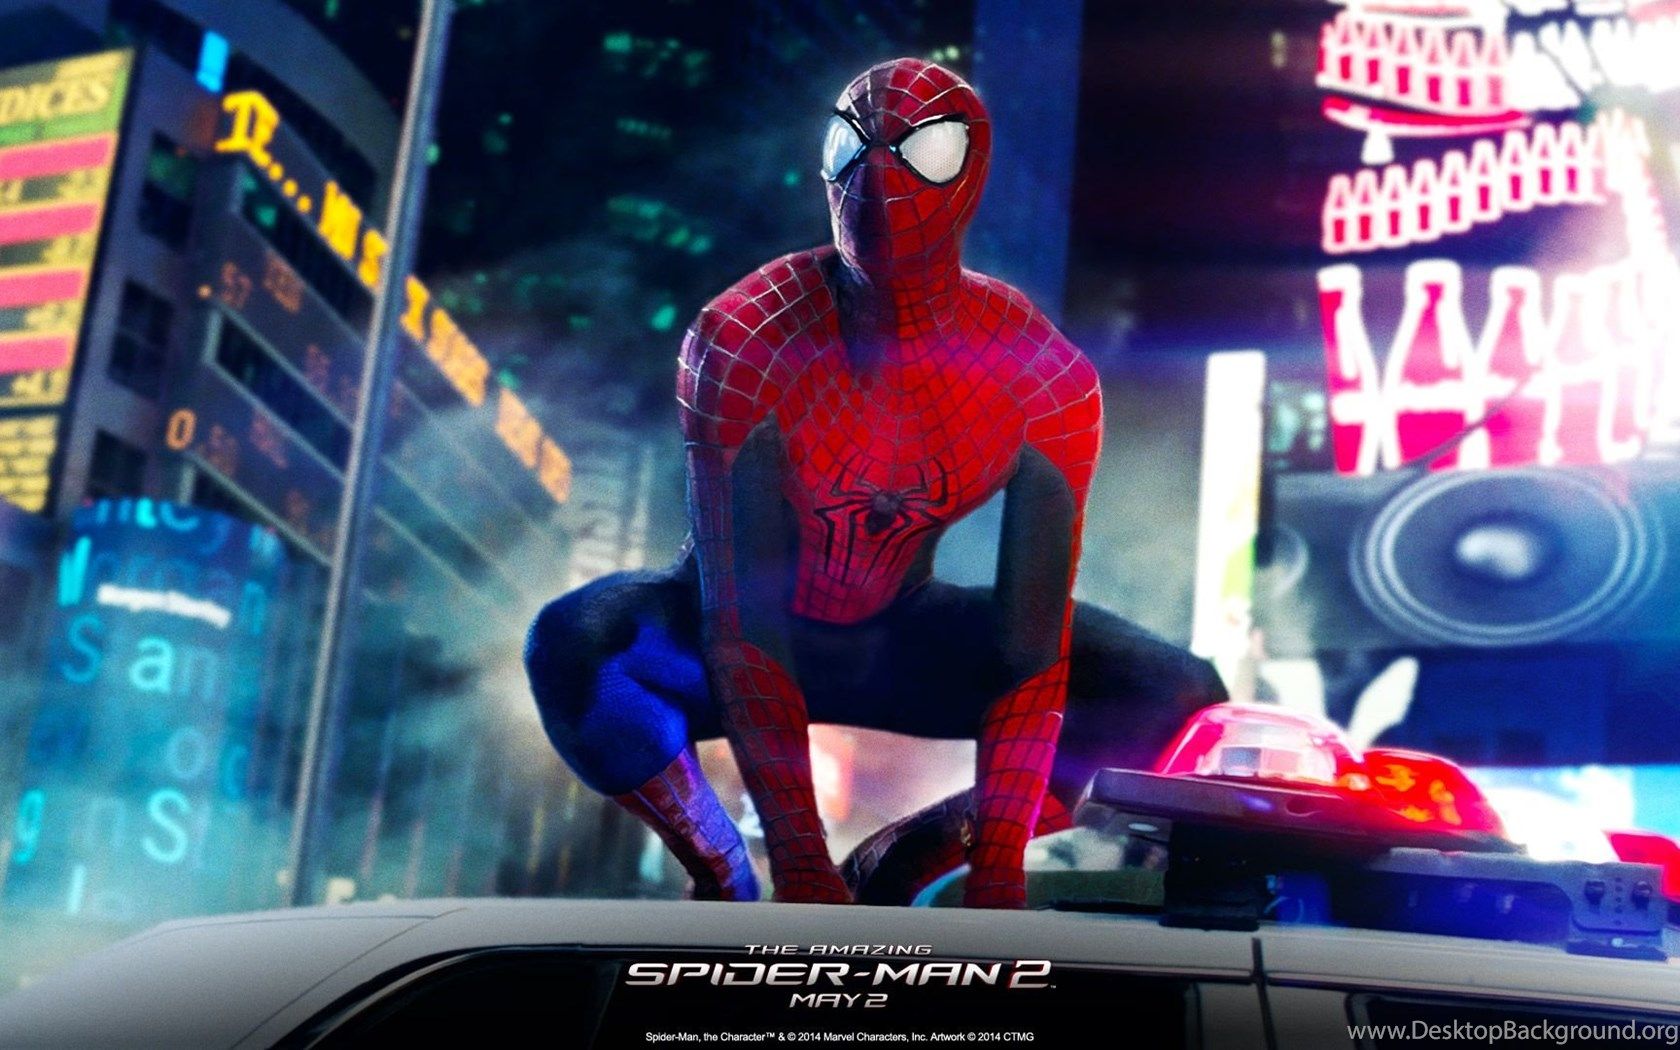 The Amazing Spider Man 2 Computer Wallpaper, Desktop Background. Desktop Background